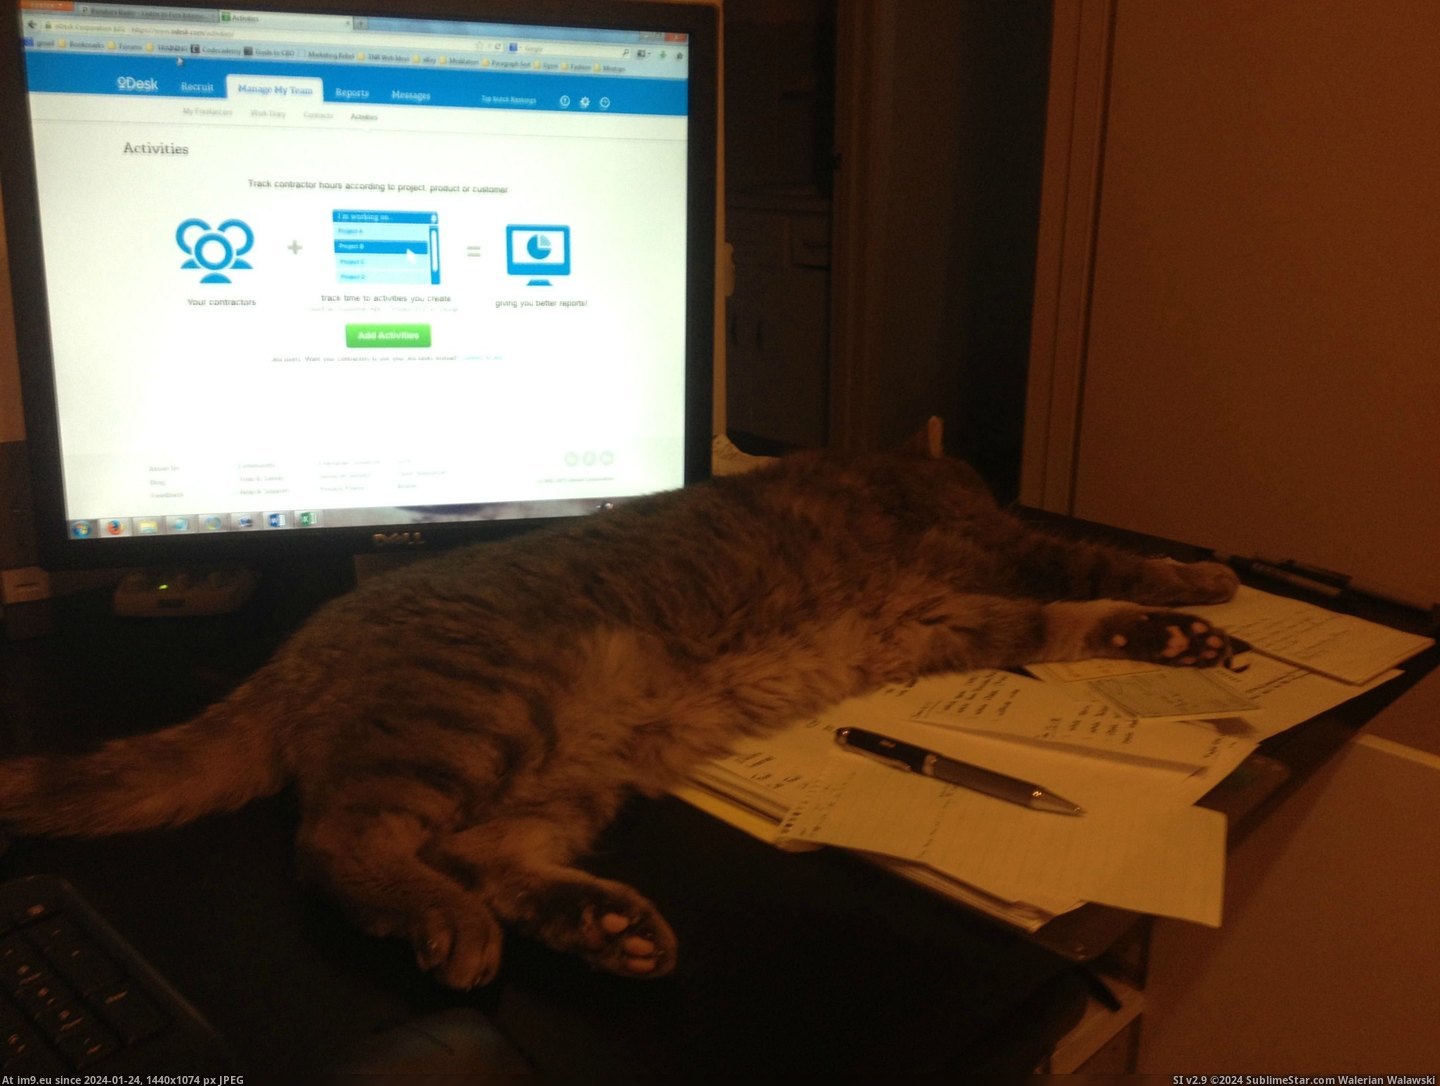 #Cats #Work #Spaces #Kitty #Fucks [Cats] Mr. Kitty still fucks up work spaces 2 Pic. (Bild von album My r/CATS favs))